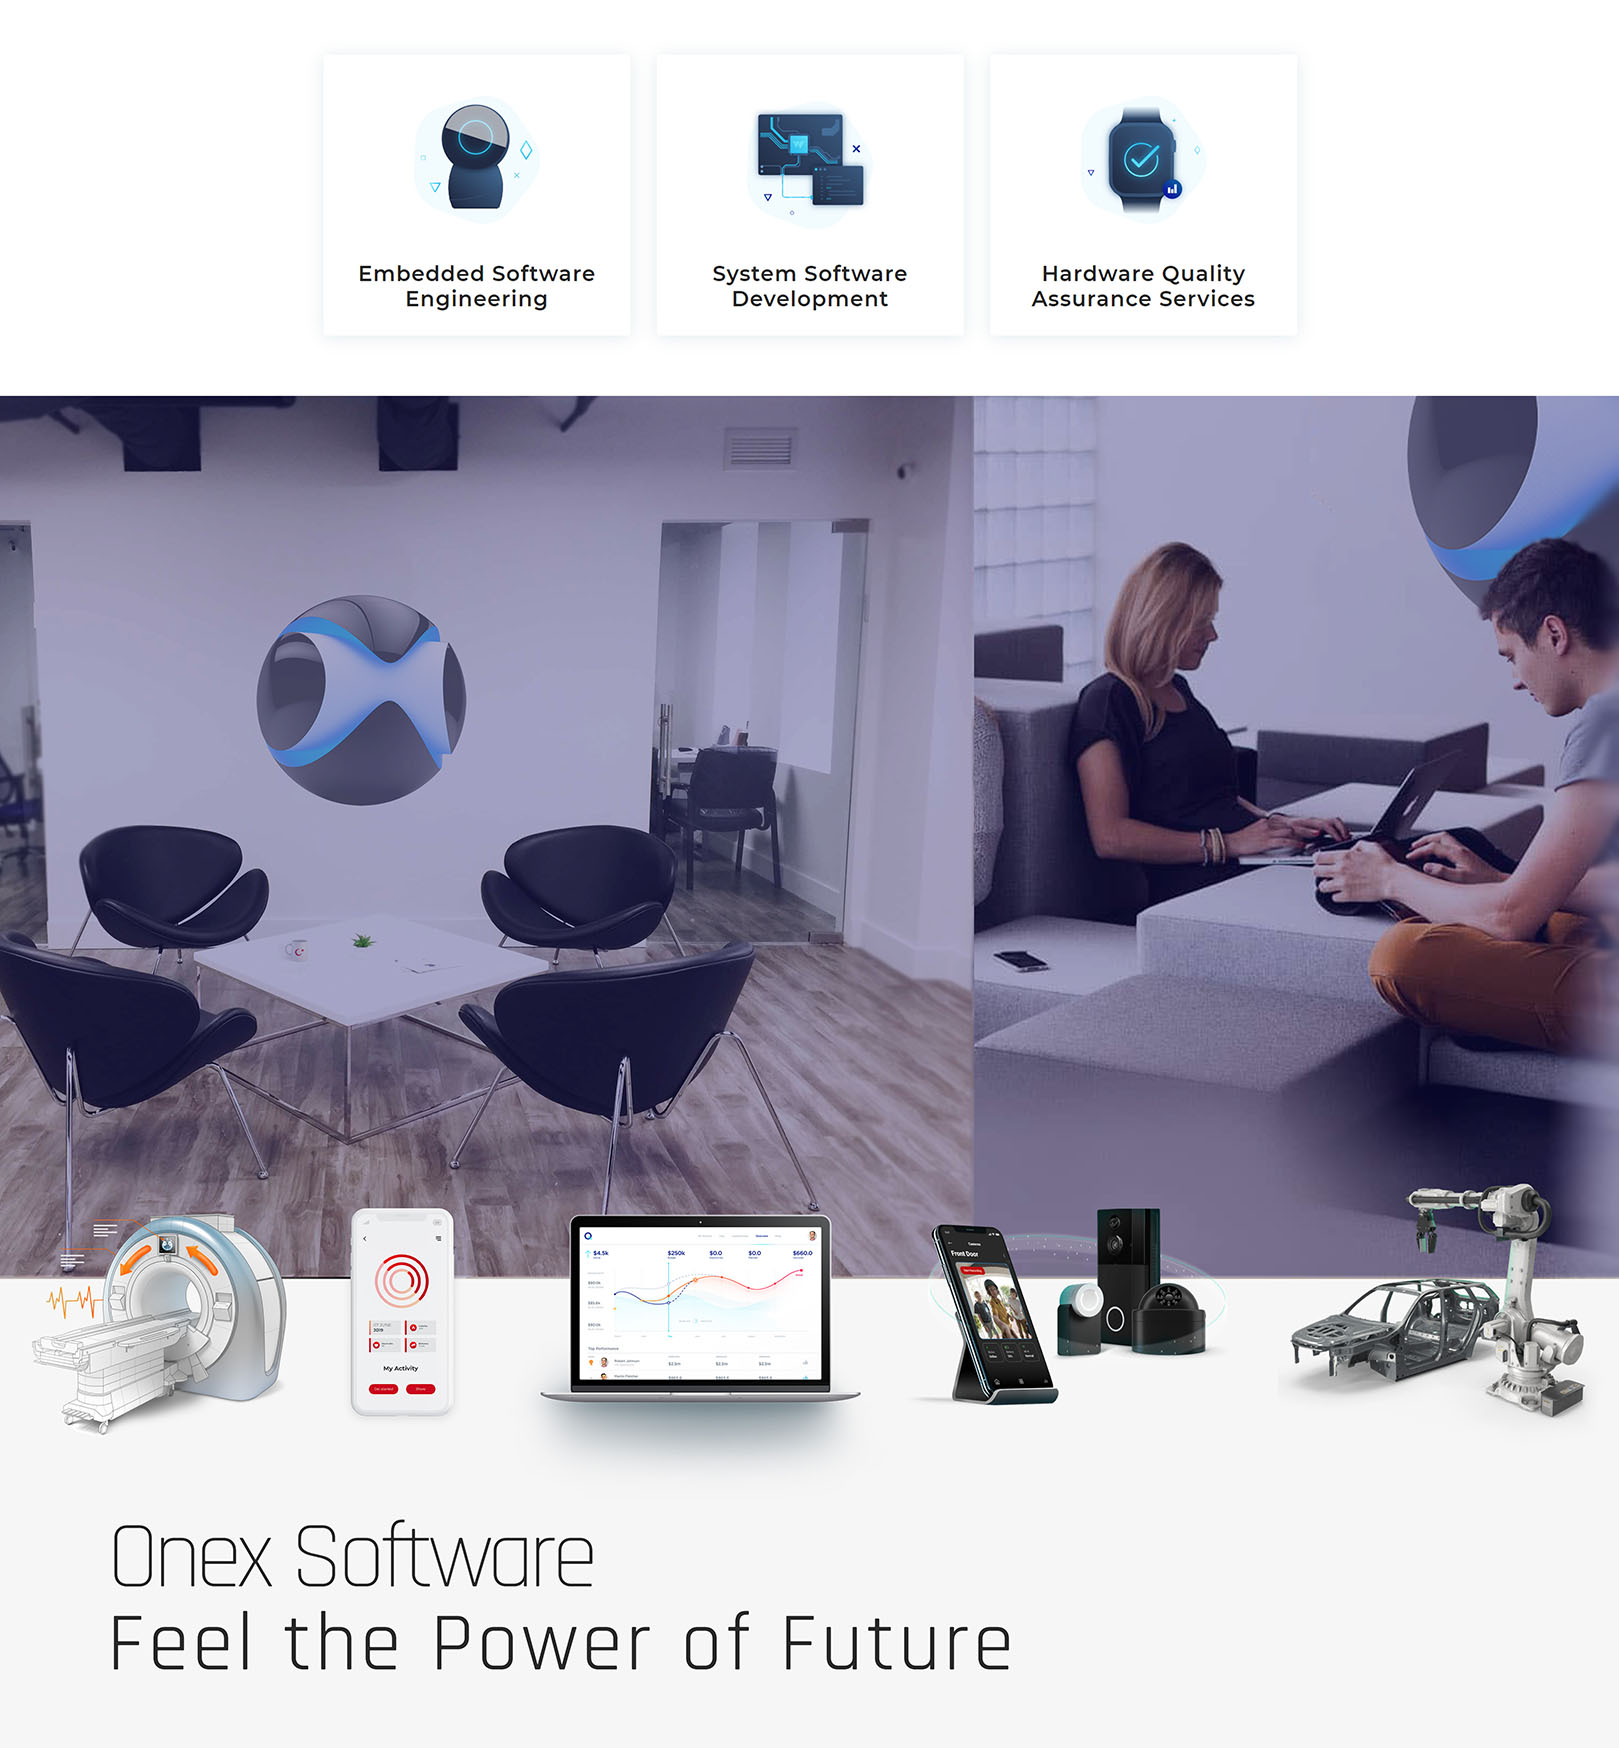 Onex Software